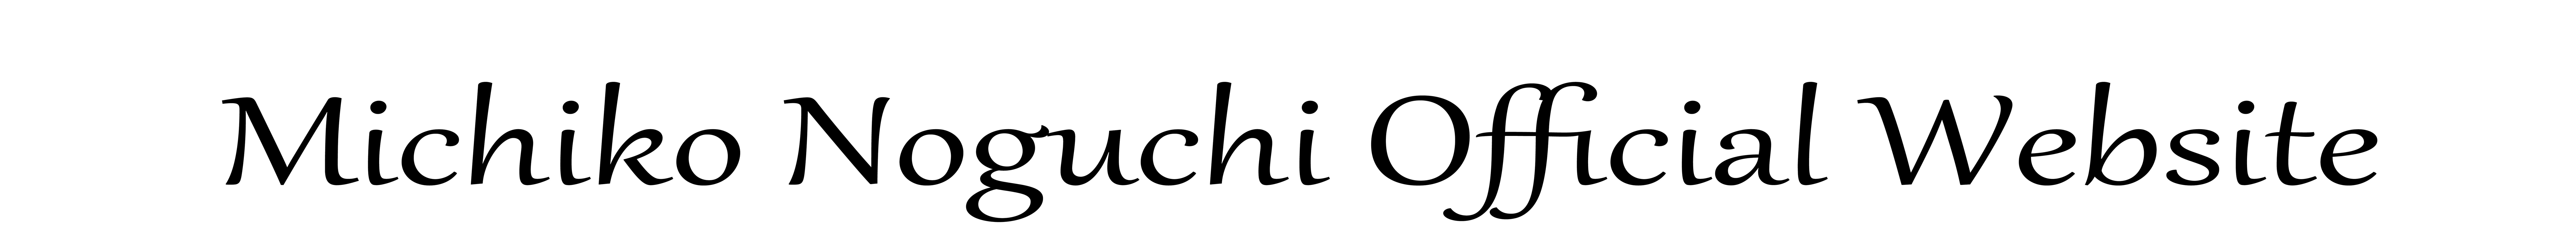 Michiko Noguchi Official Website